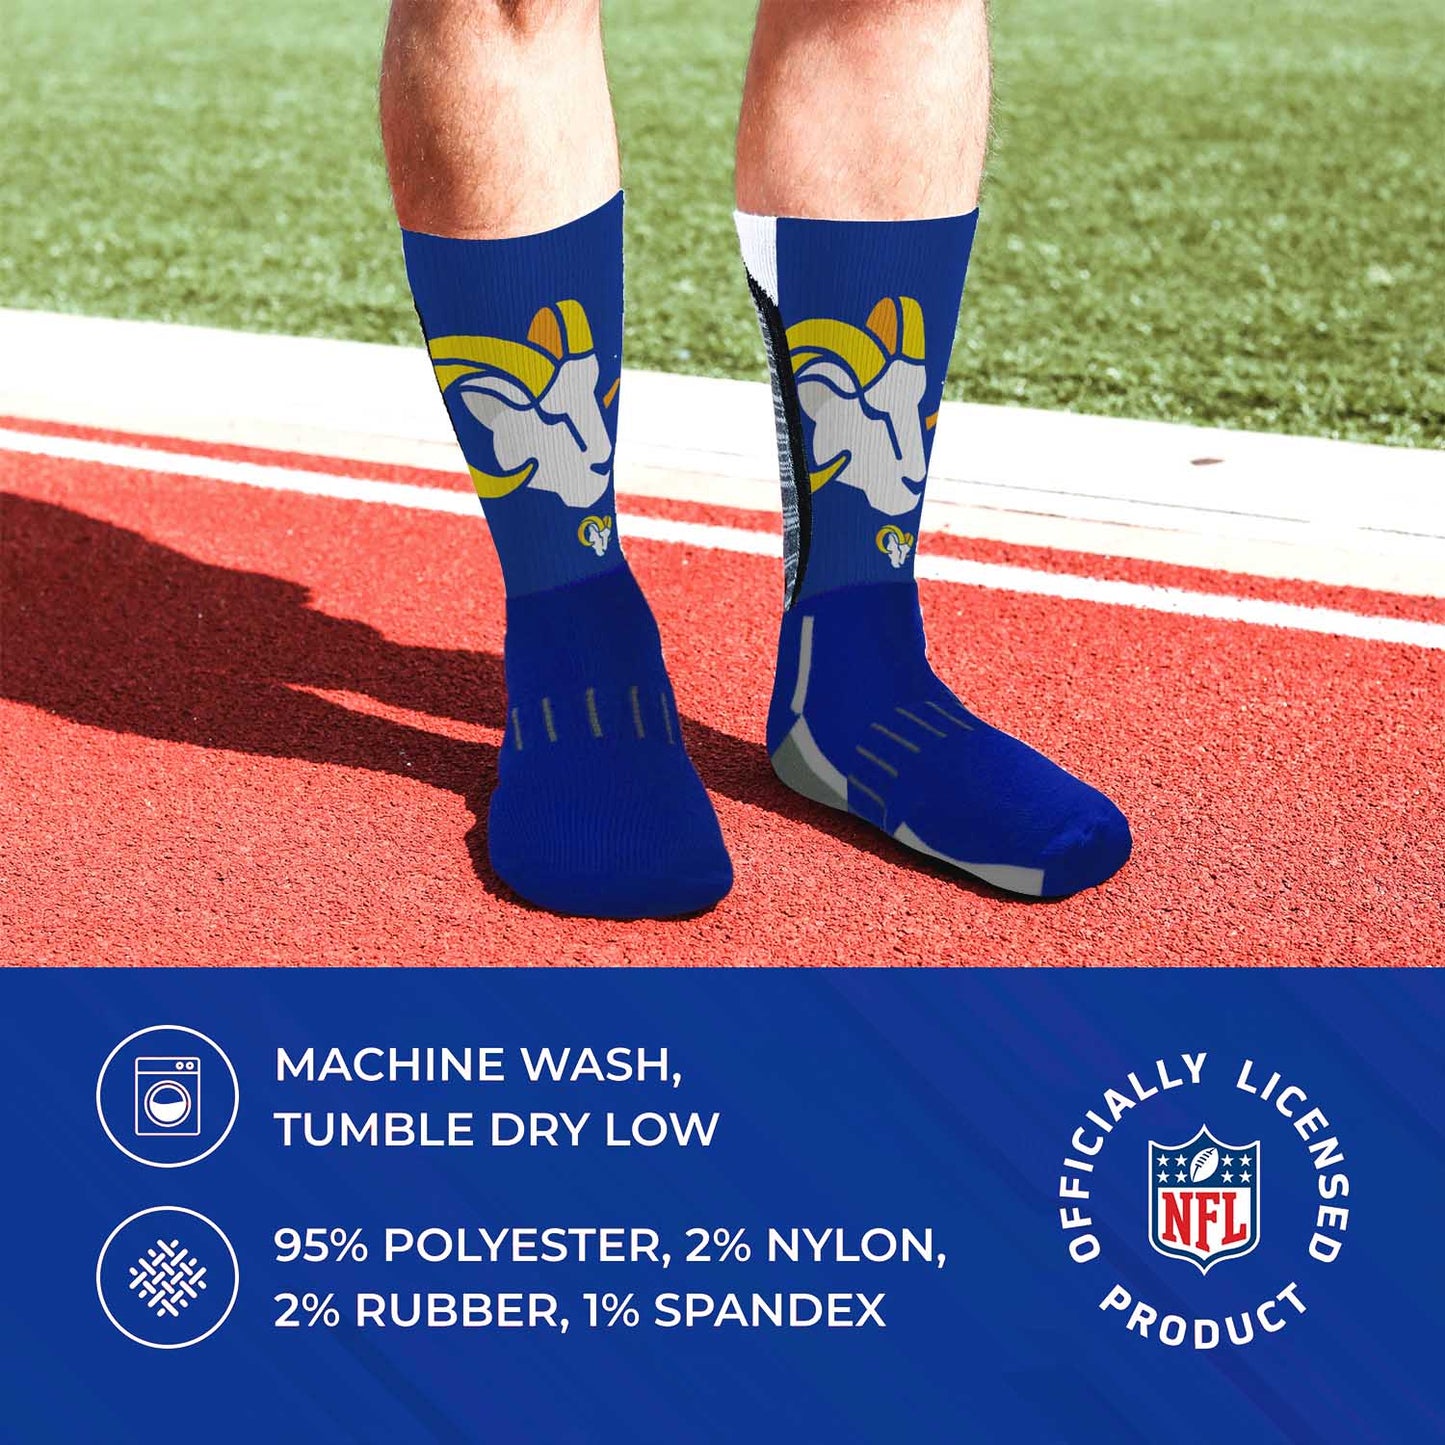 Los Angeles Rams NFL Youth V Curve Socks - Royal